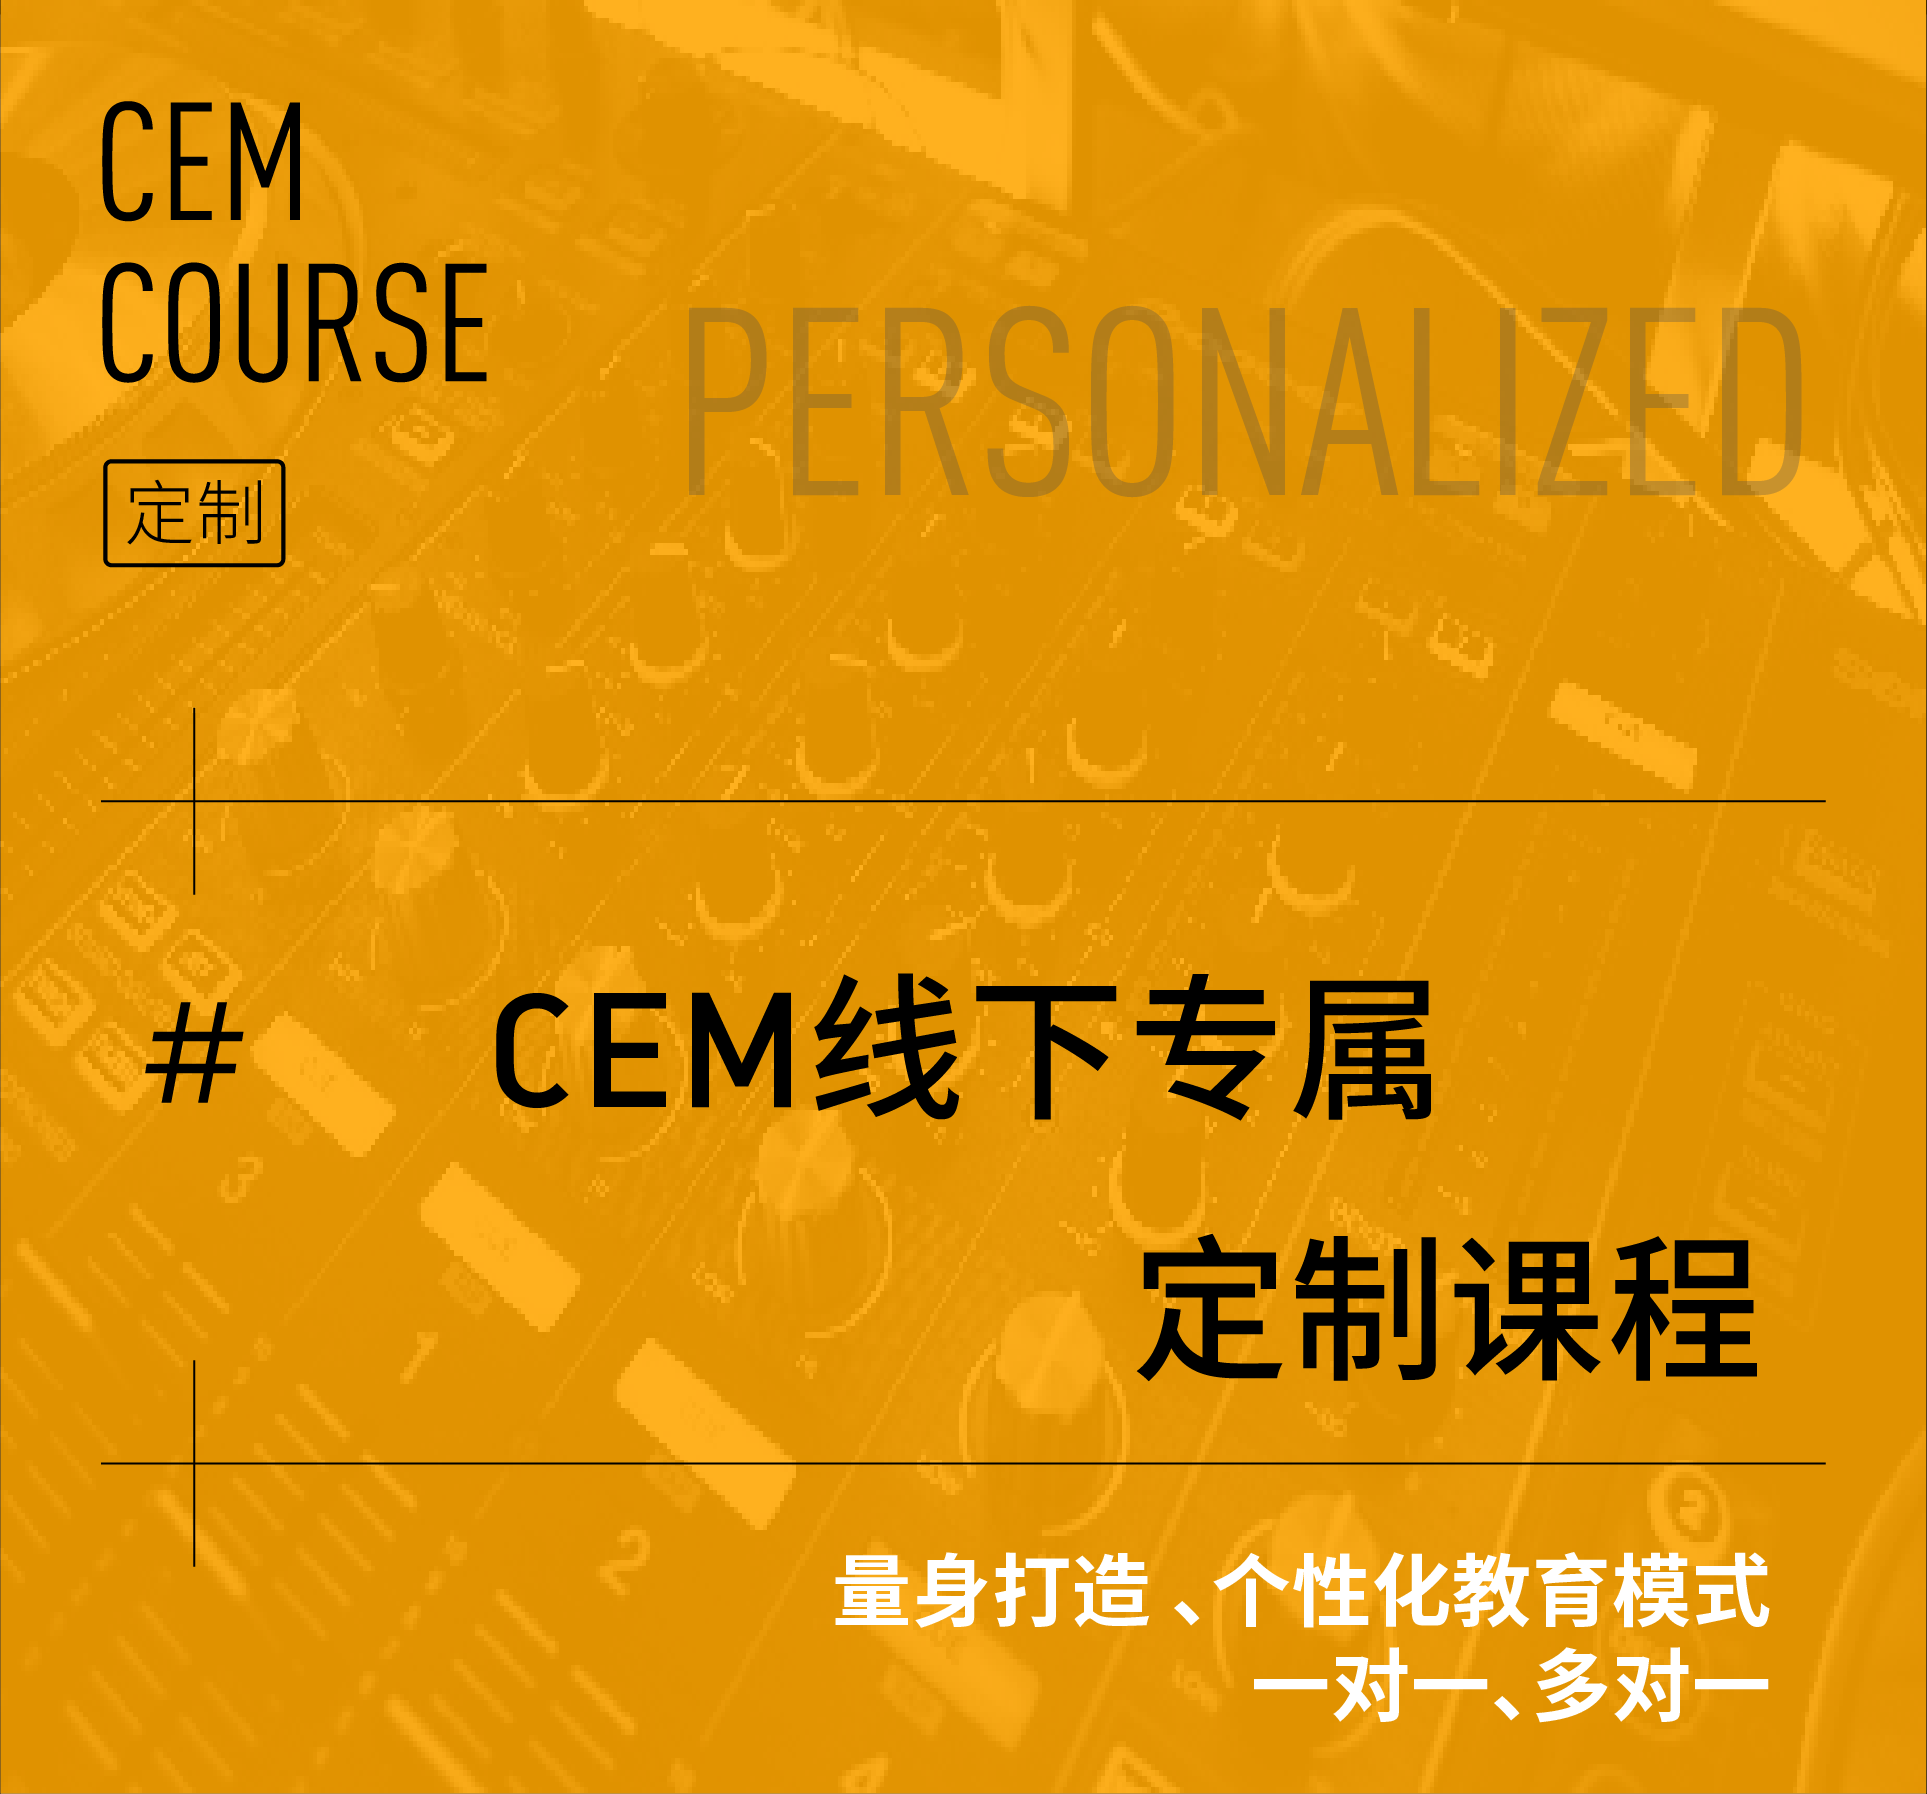 CEM一对一个性化音乐定制课程  线上/教学/编曲/电音/CEM